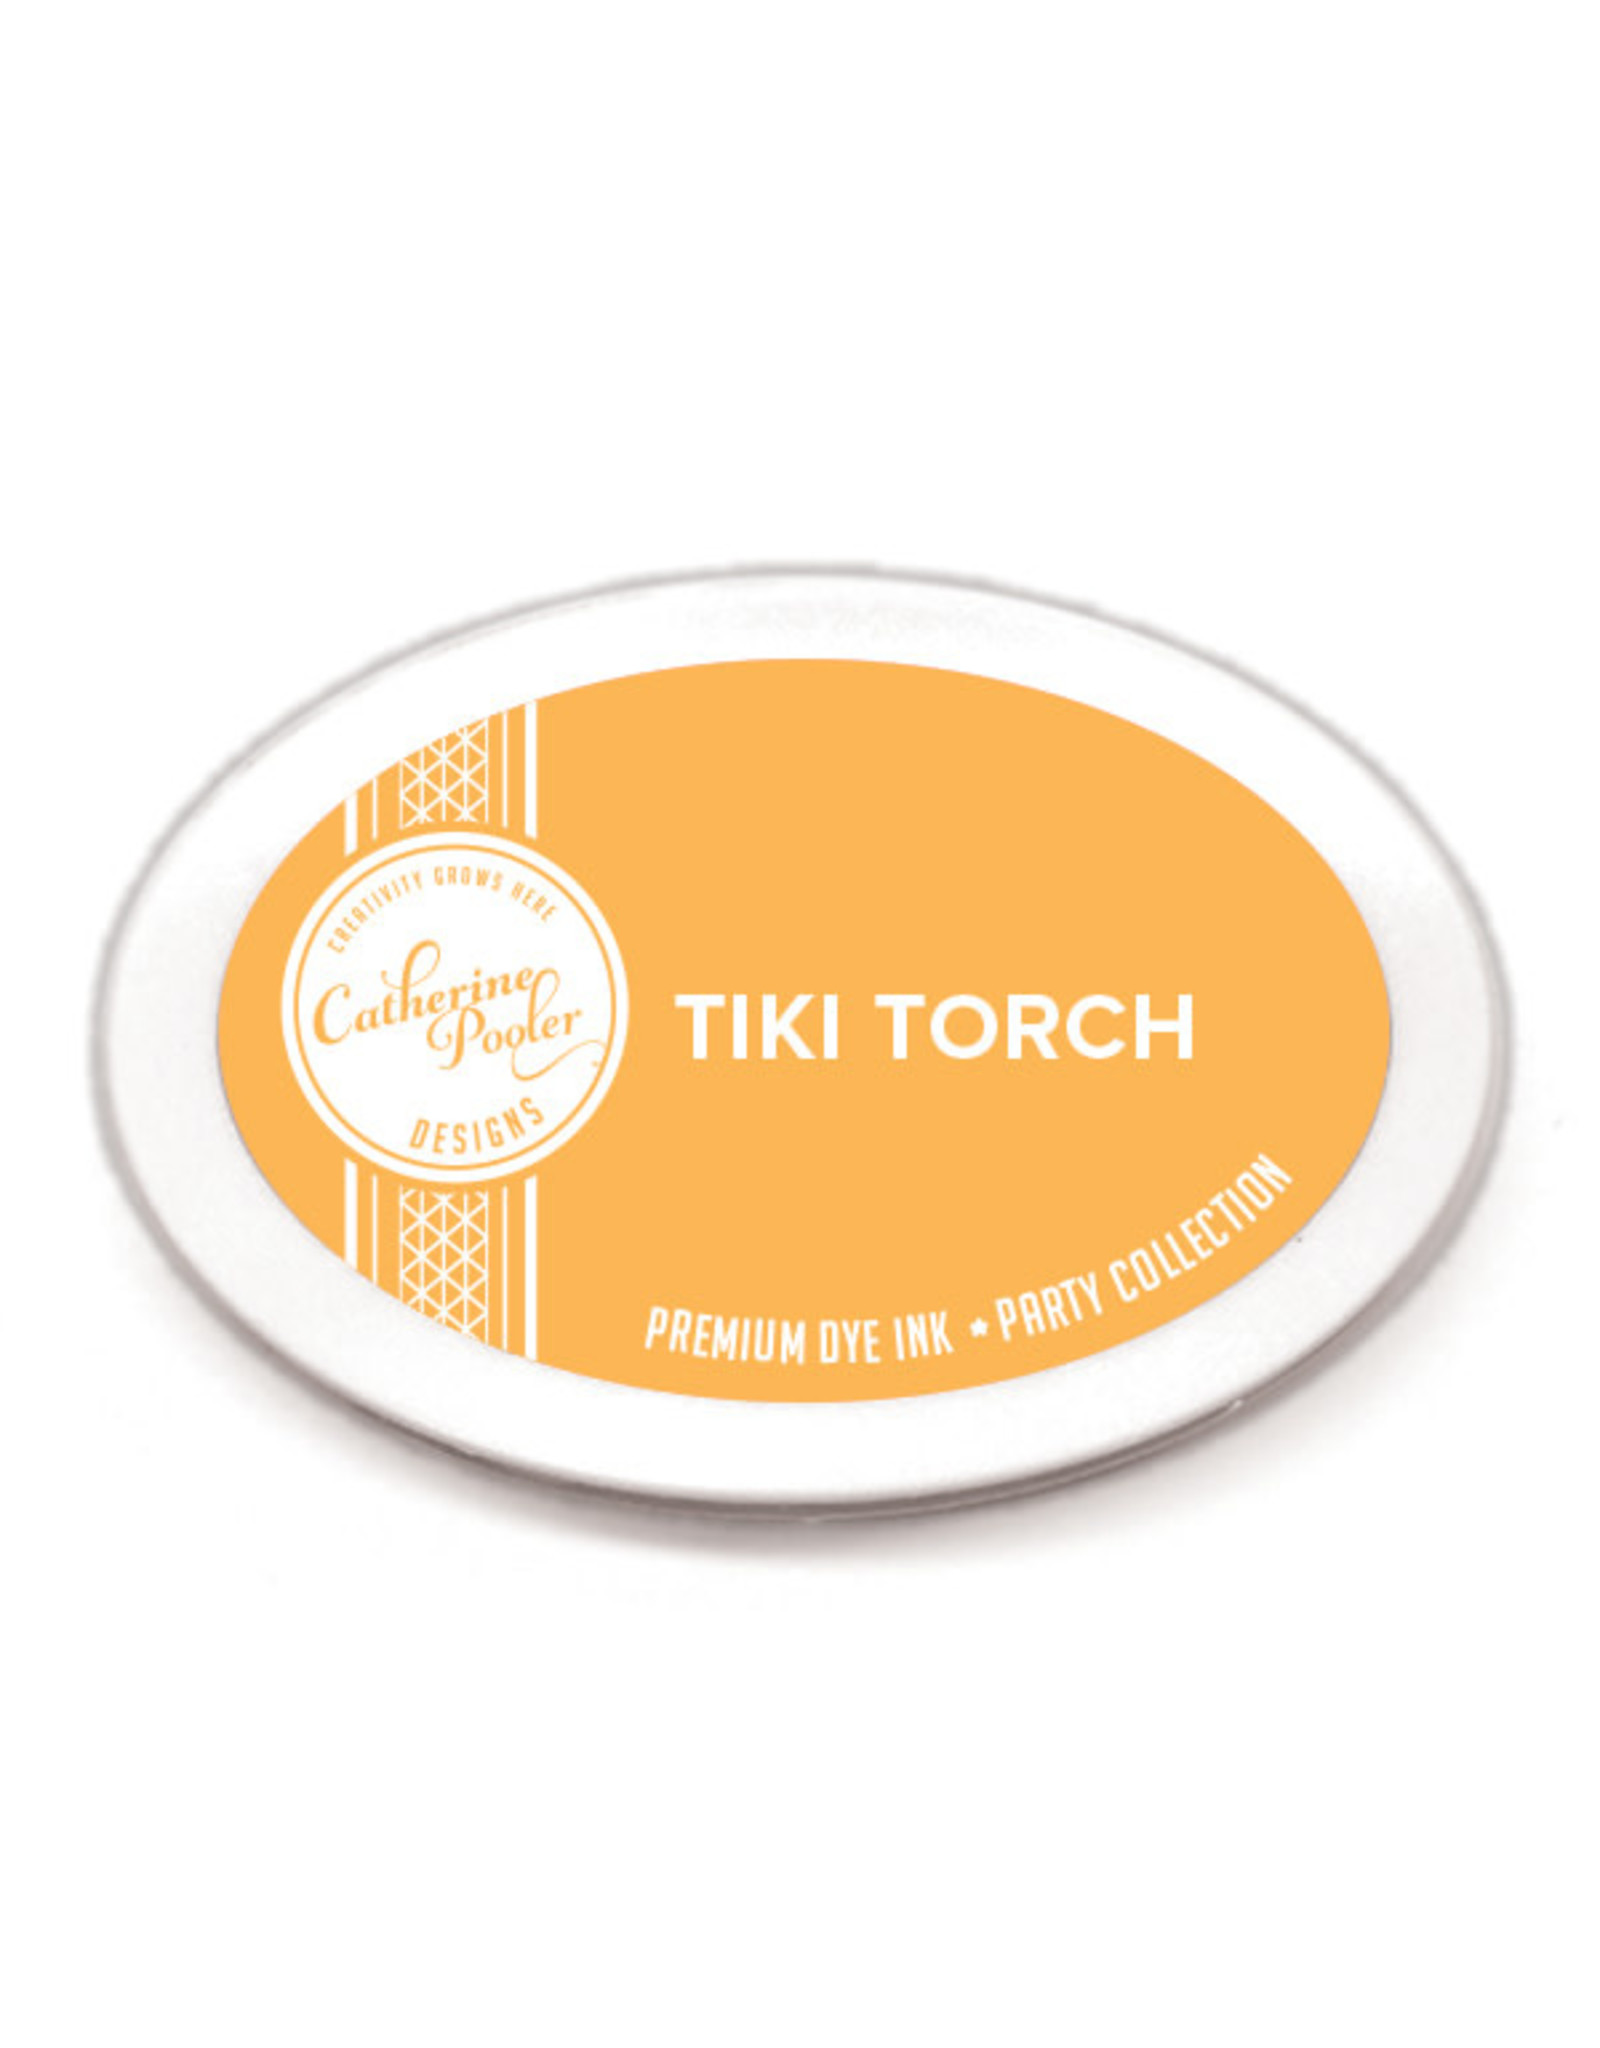 Catherine Pooler Designs Tiki Torch Ink Pad